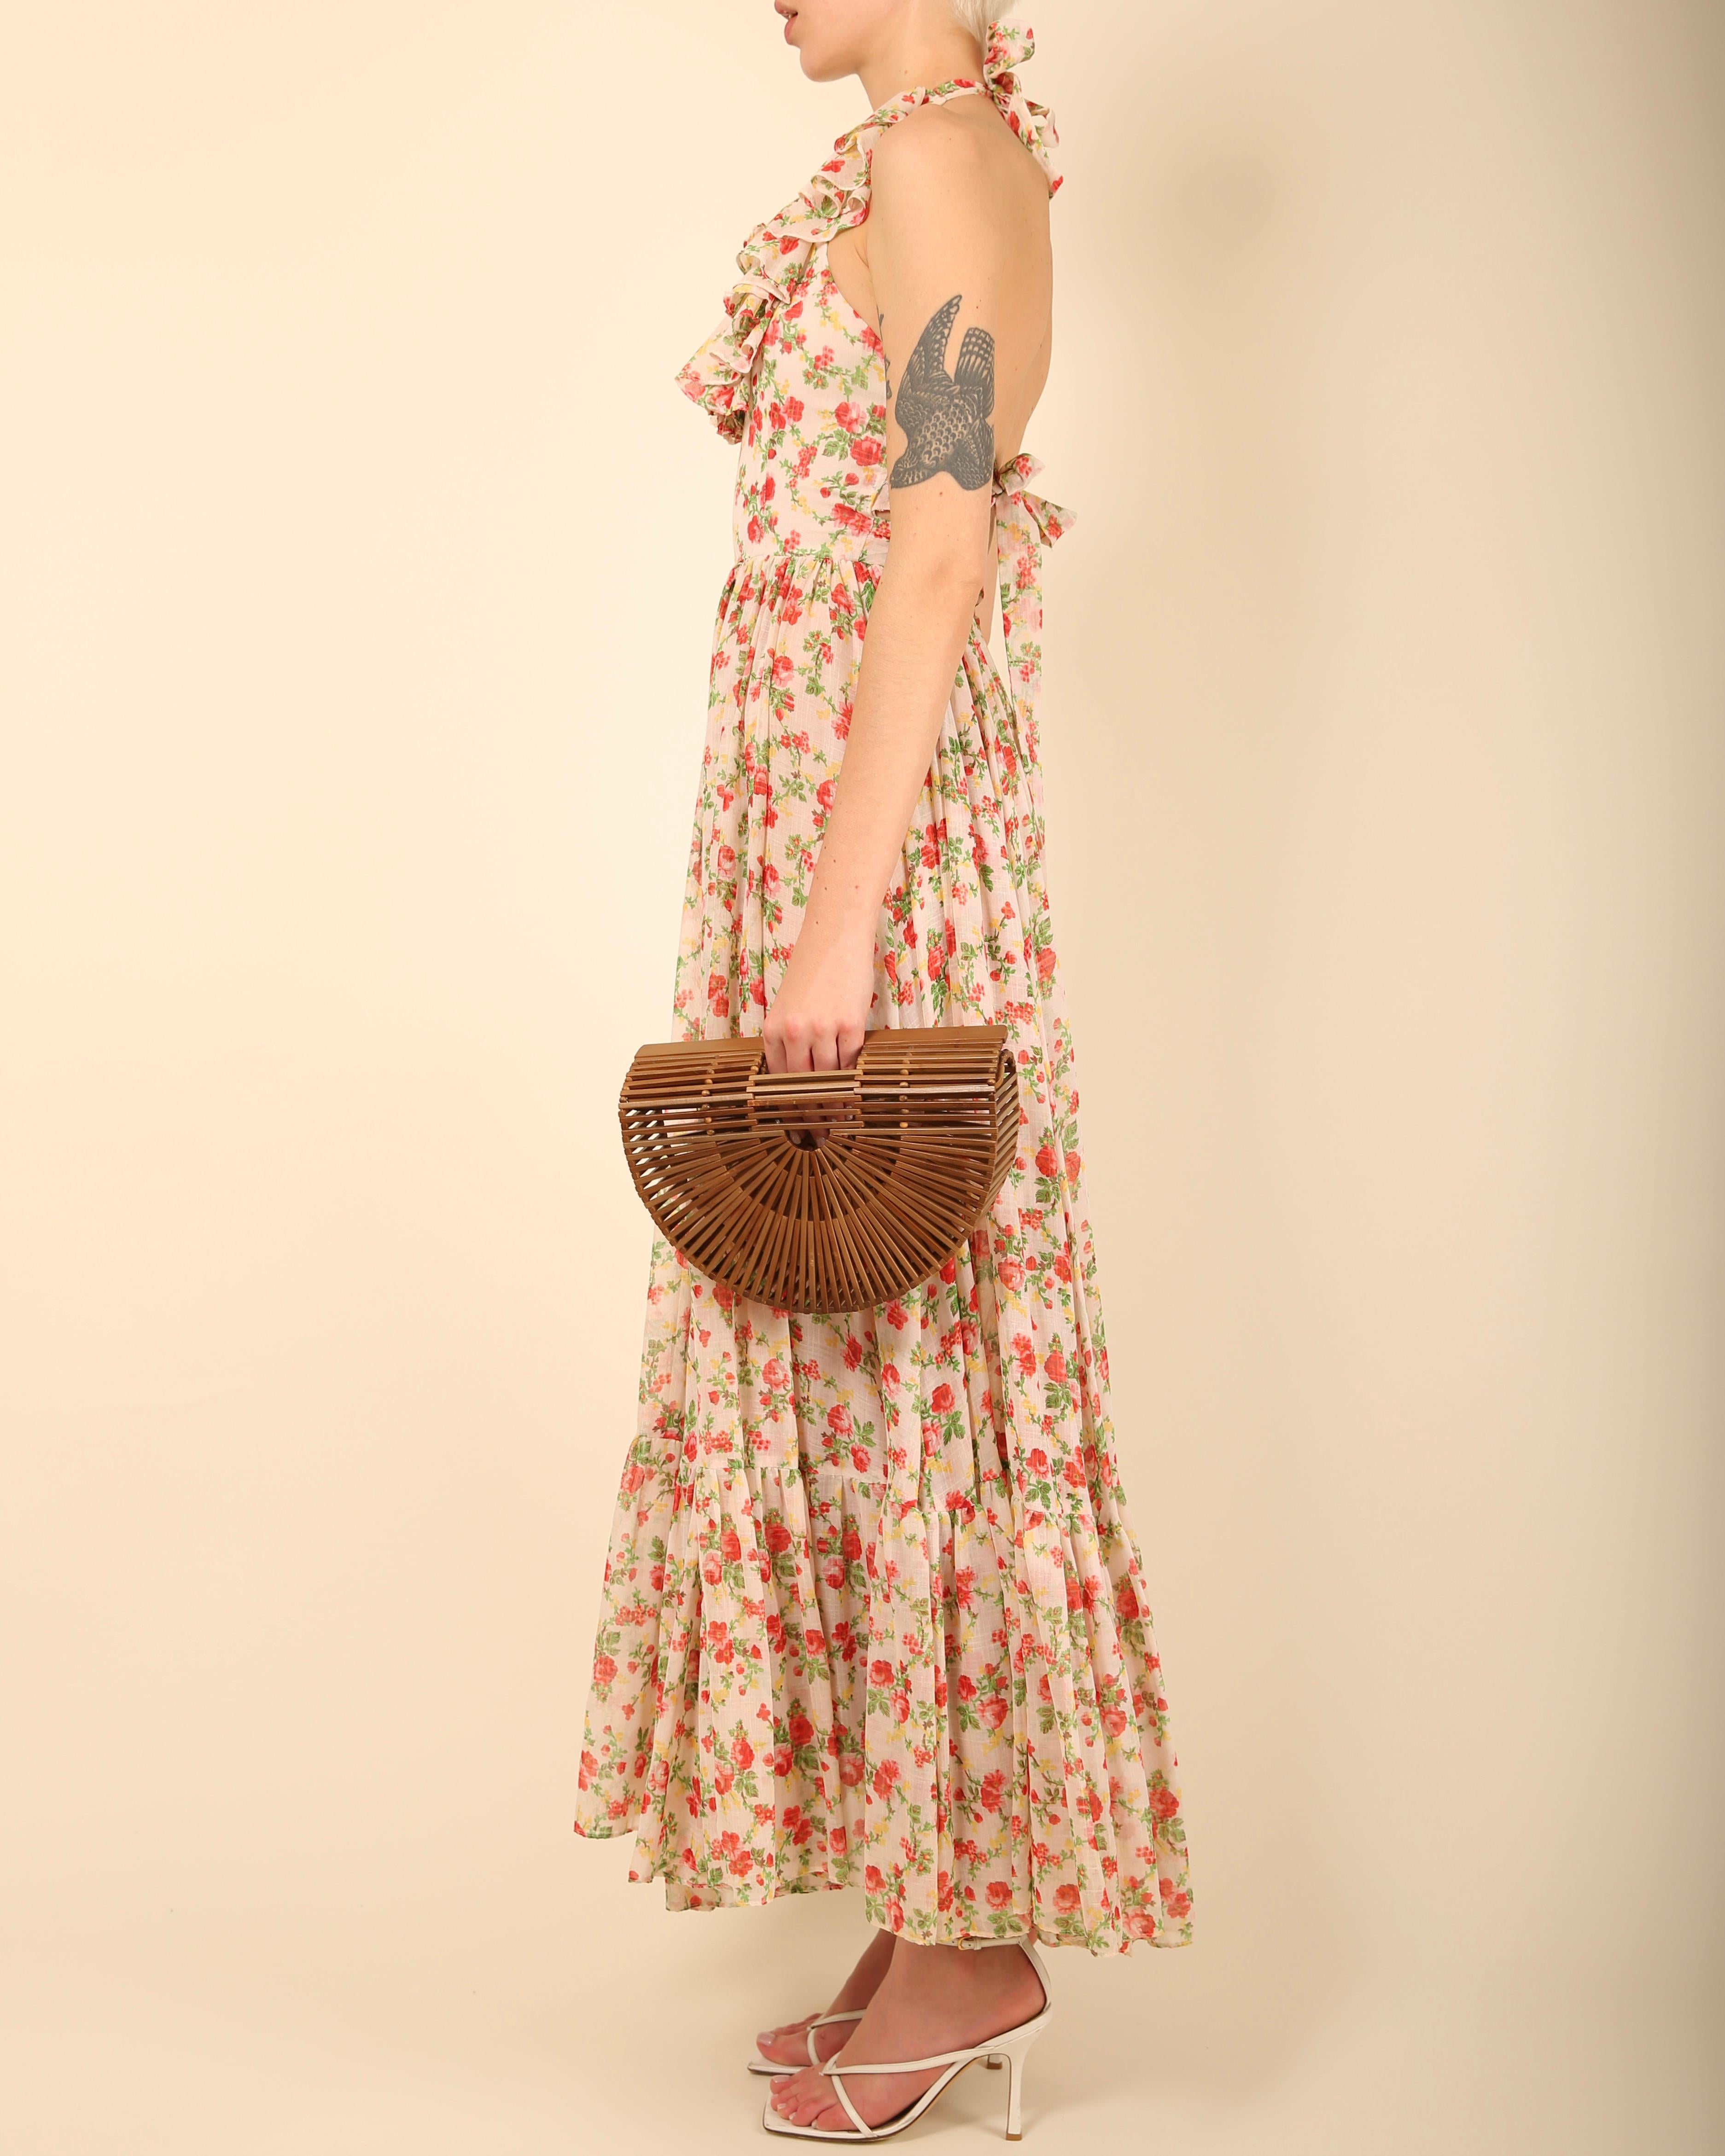 Vintage cottagecore prairie cotton white red floral print halter backless dress For Sale 6